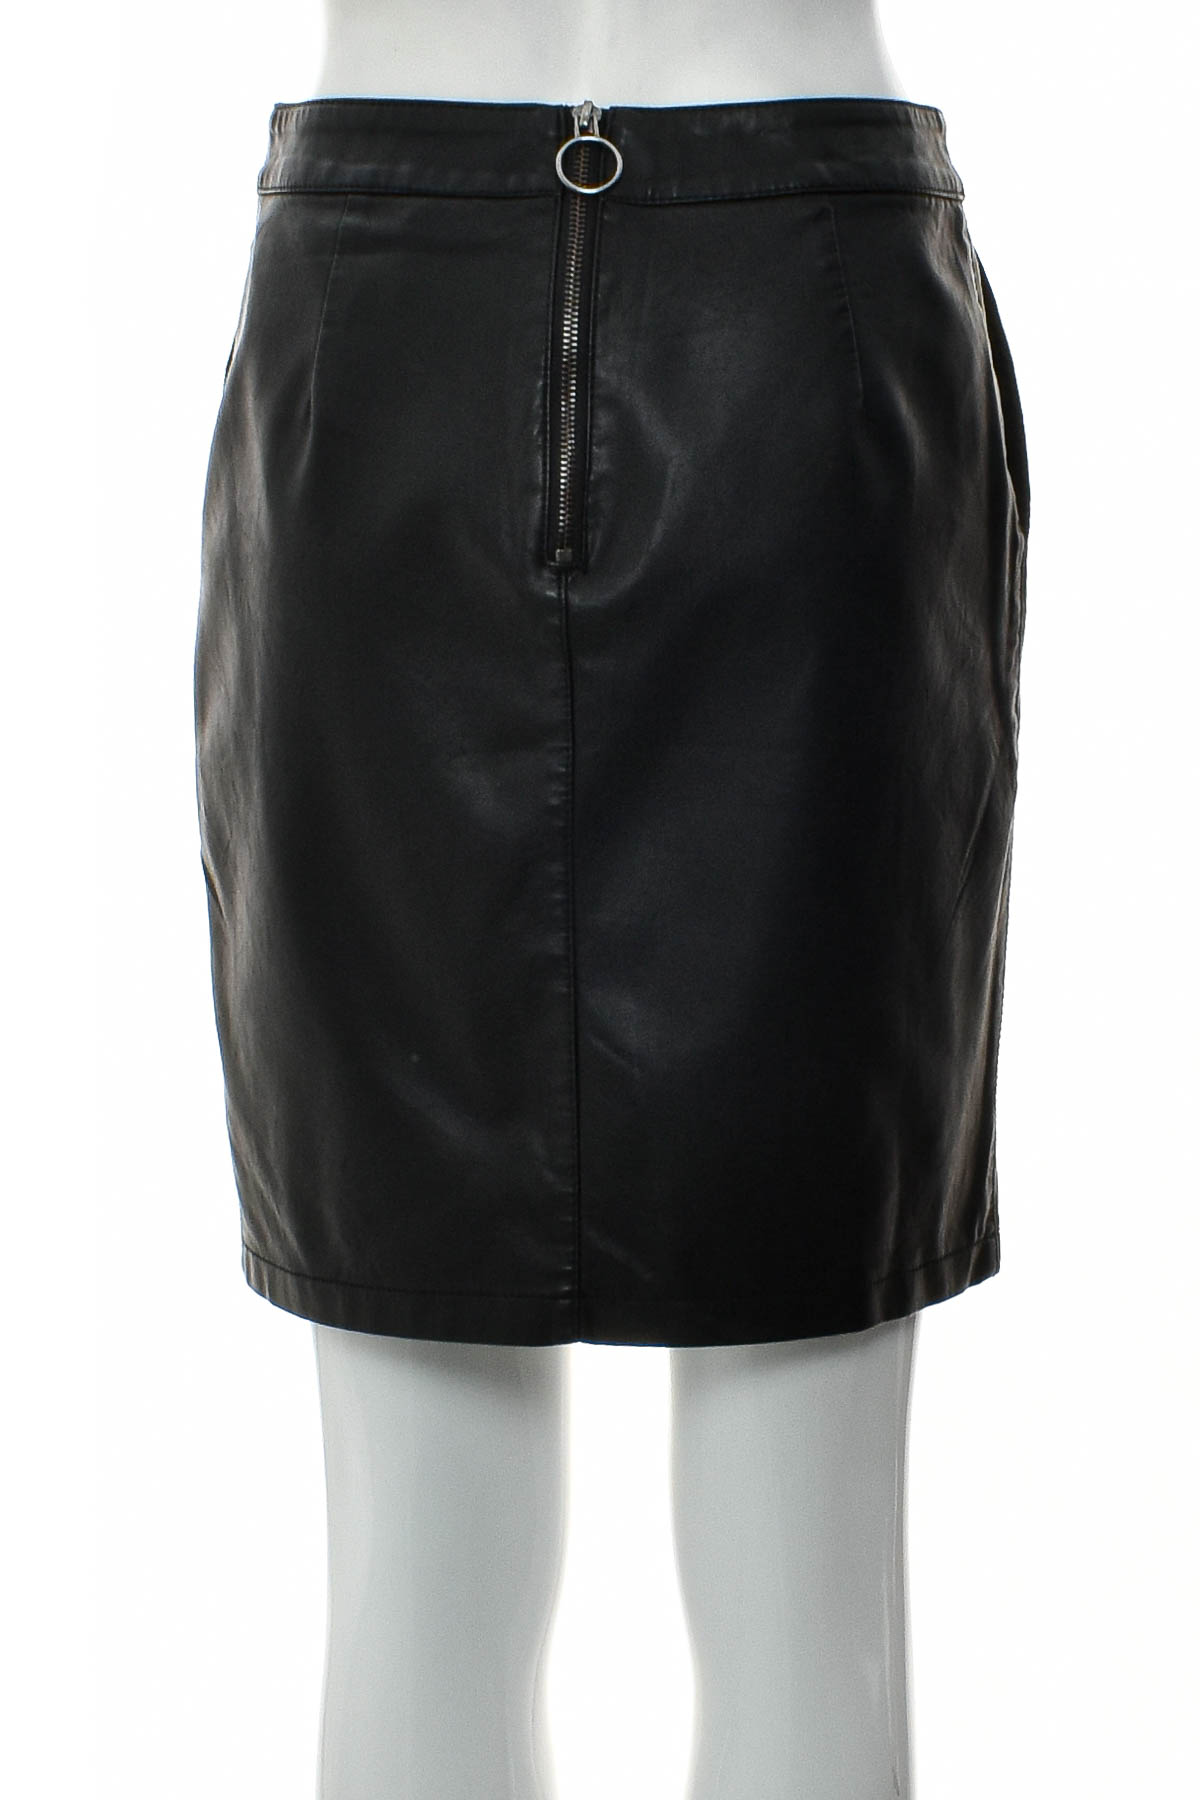 Leather skirt - NOISY MAY - 1